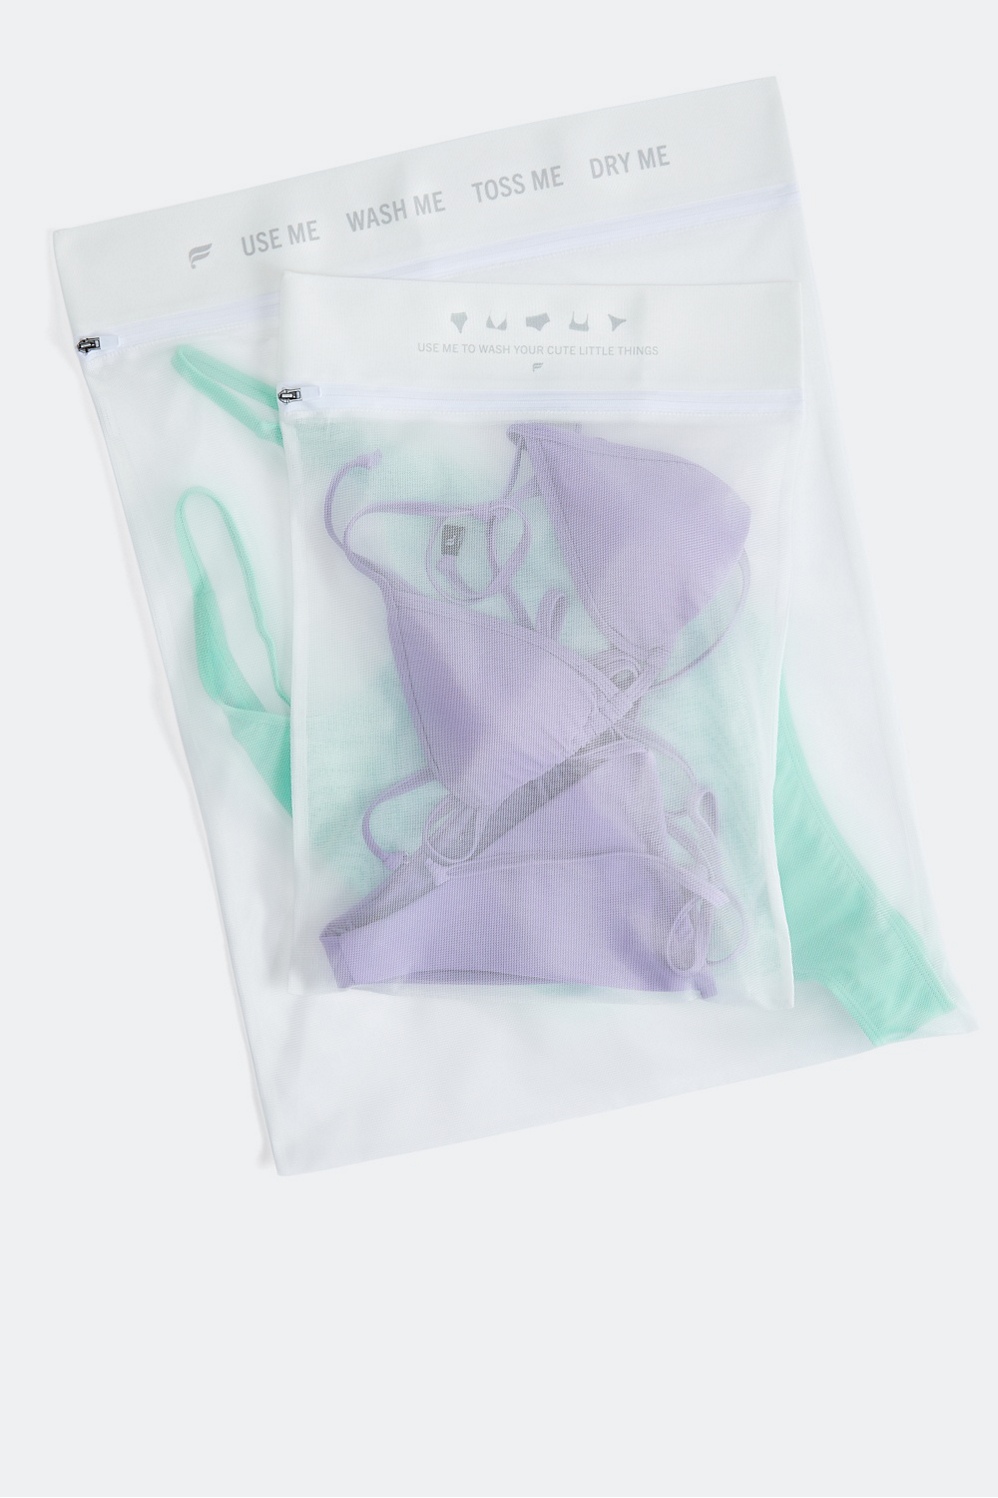 2x Lingerie Zipped Laundry Bag Underwear Bra Clothes Socks Wash Bag 